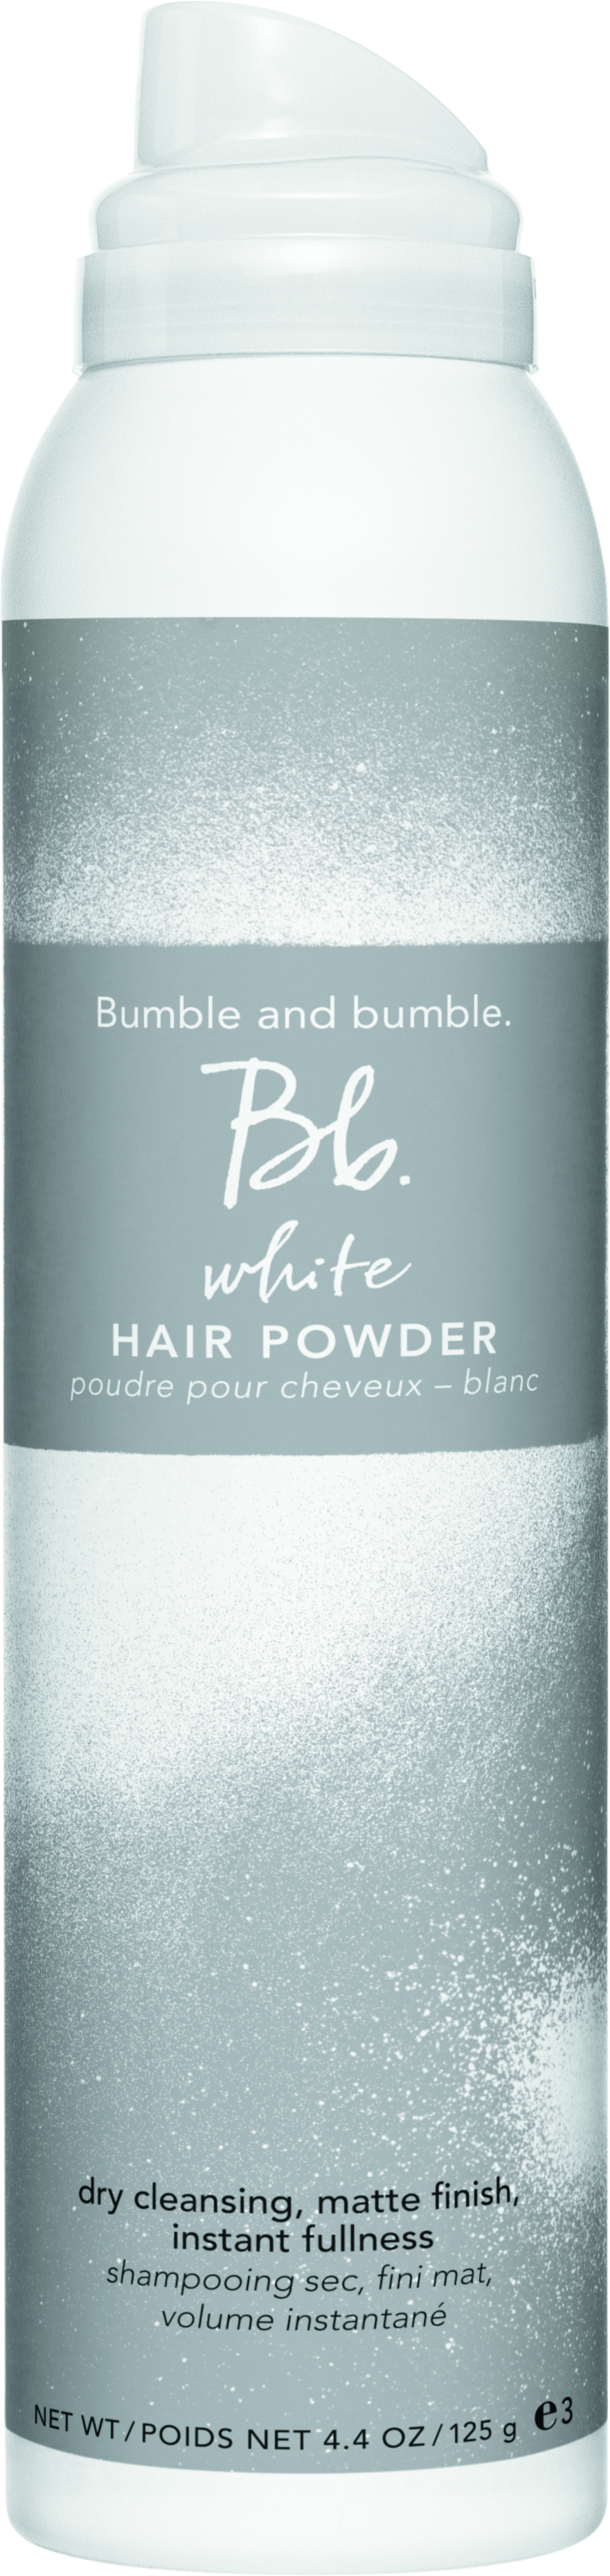 Bumble and bumble White Hair Powder 125g